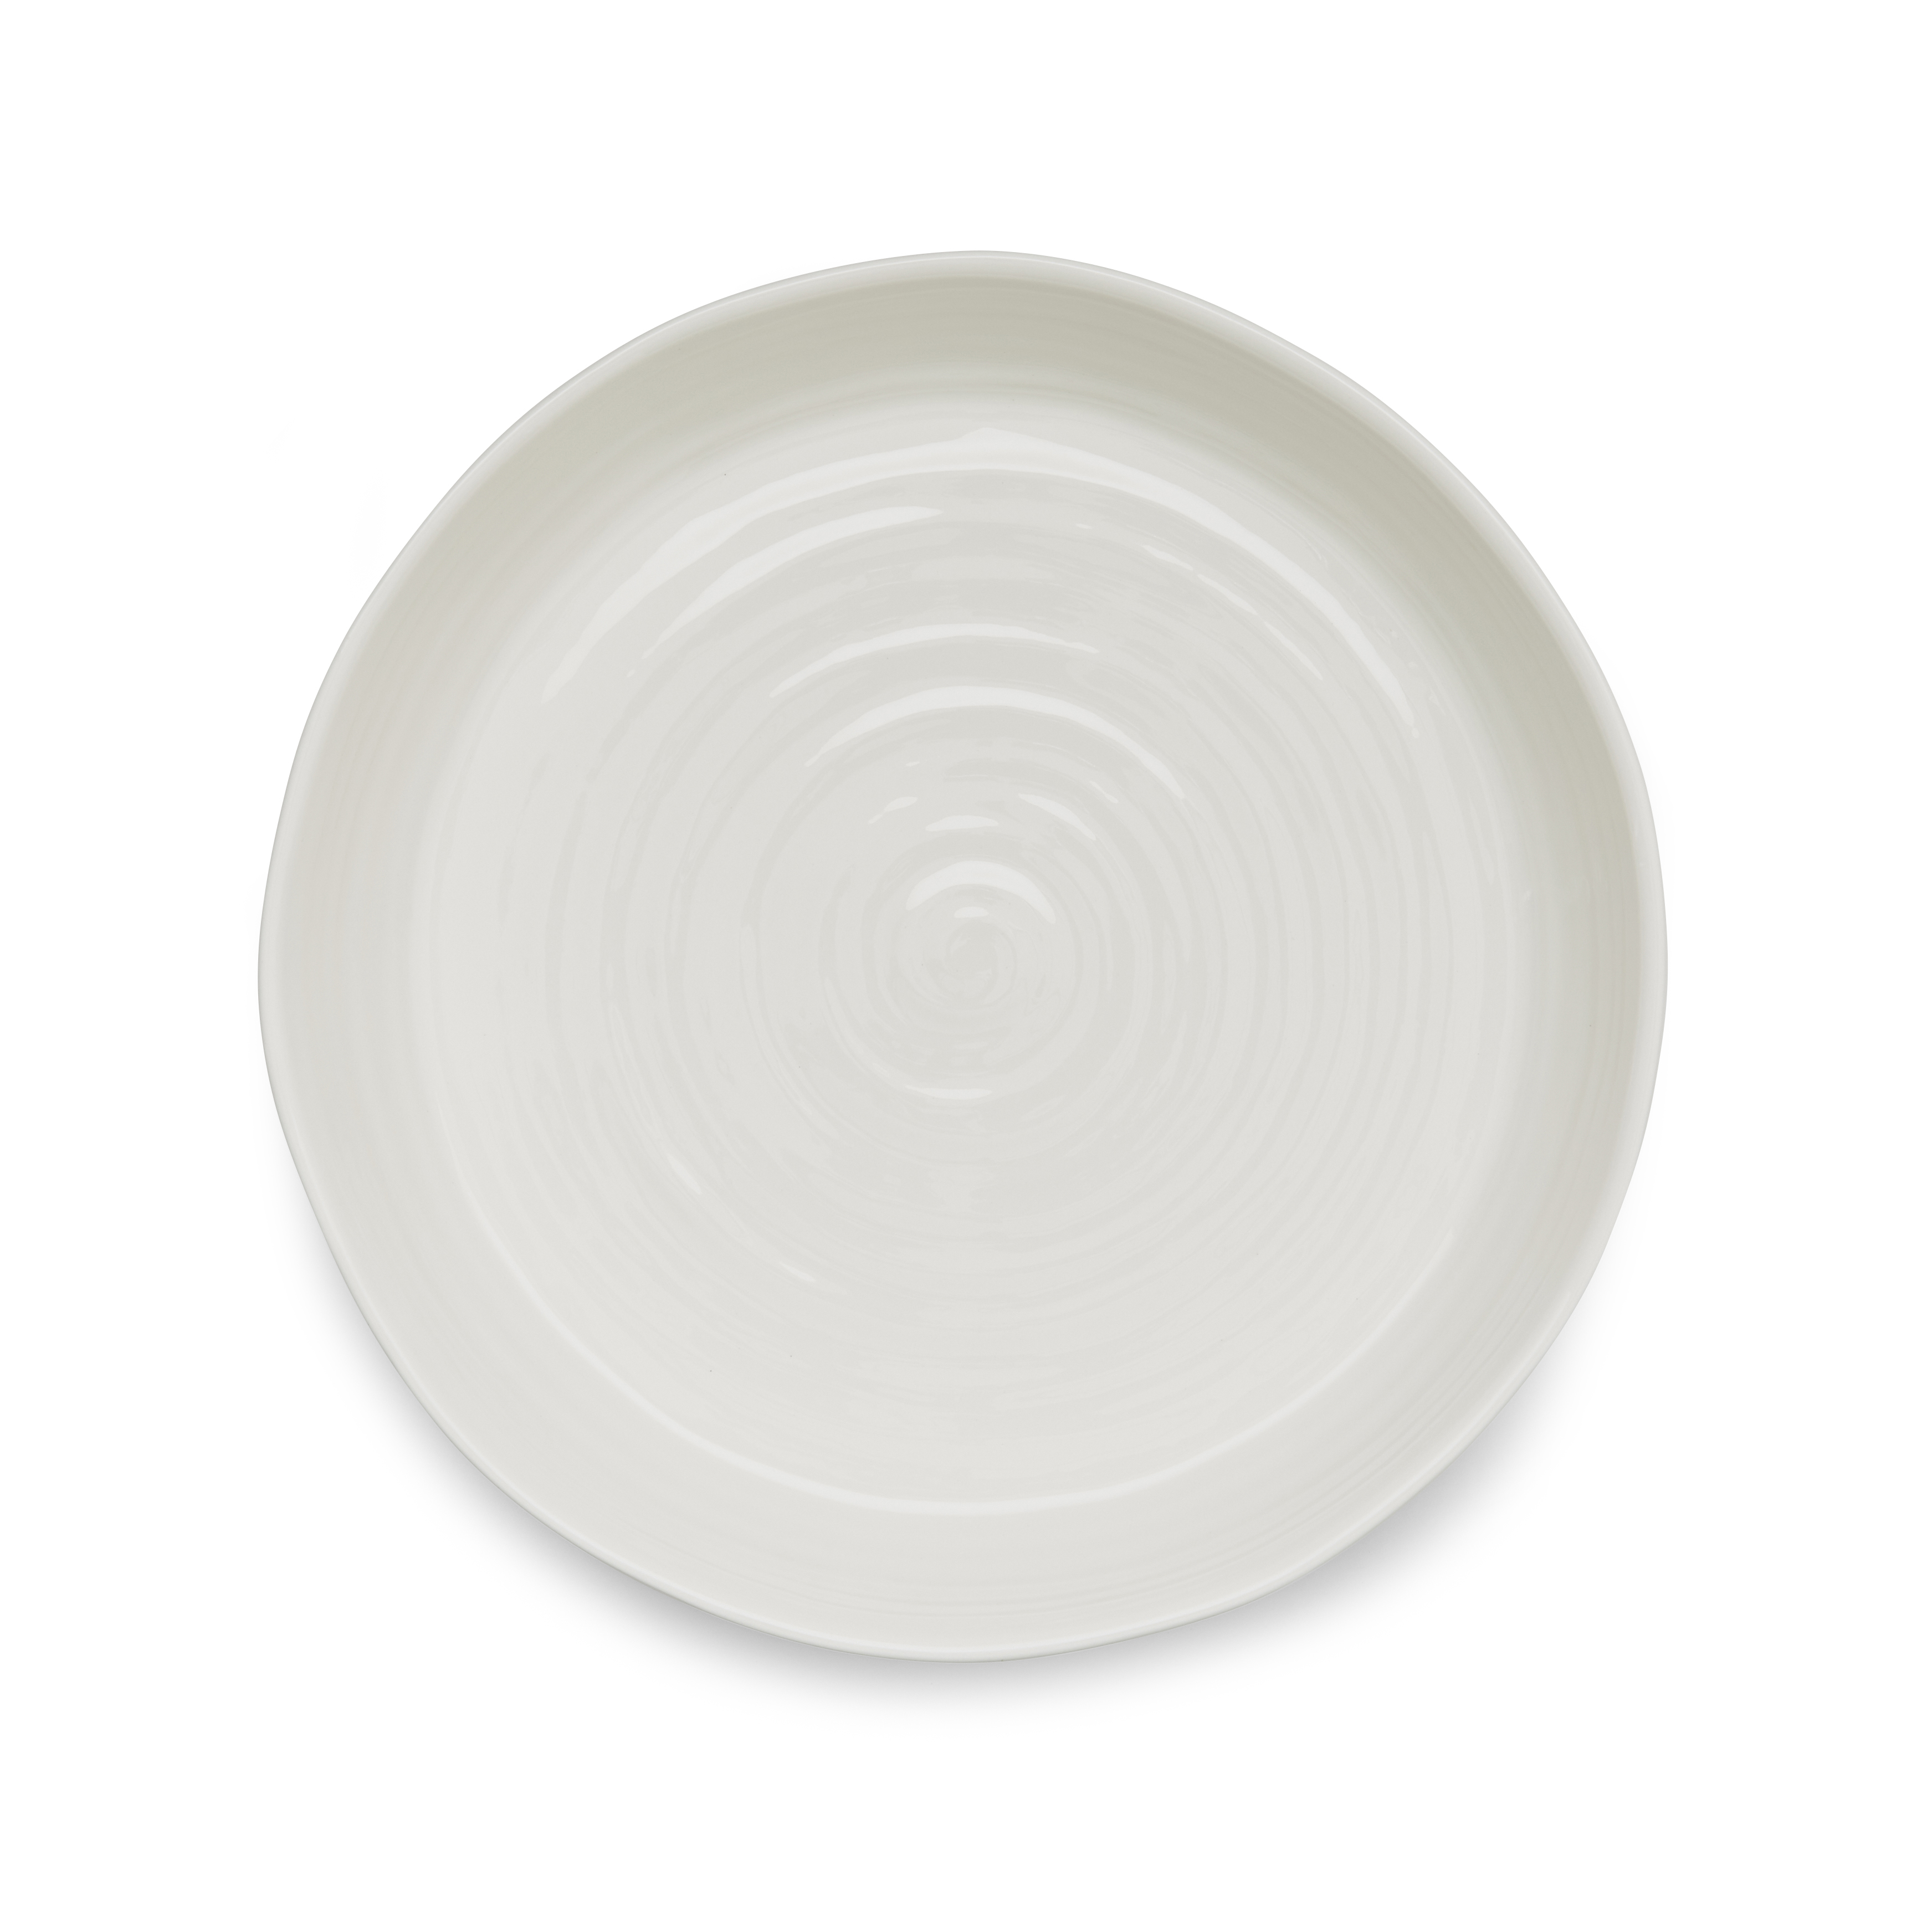 Sophie Conran Round Roasting Dish, White image number null